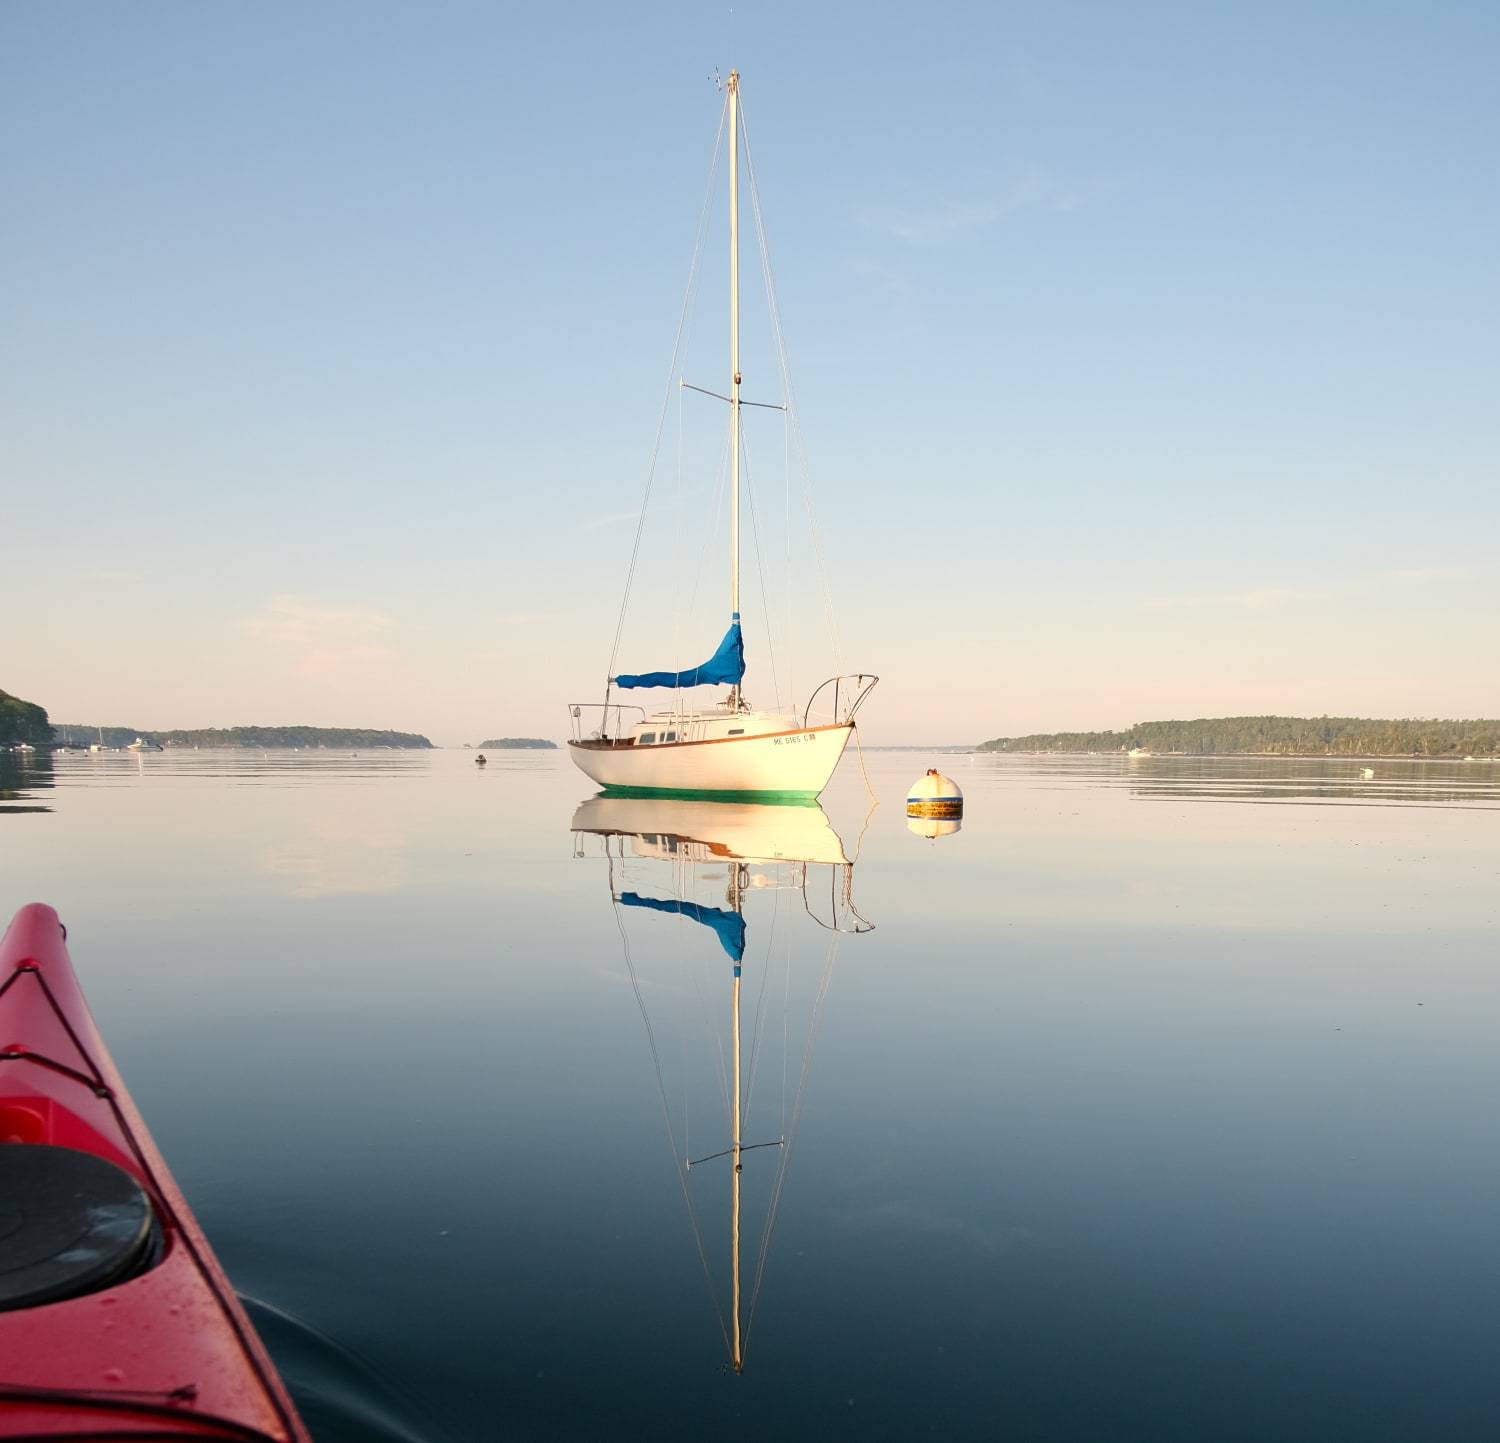 When a kayak, camera, and sailboat meet in a Liniken Bay, ME